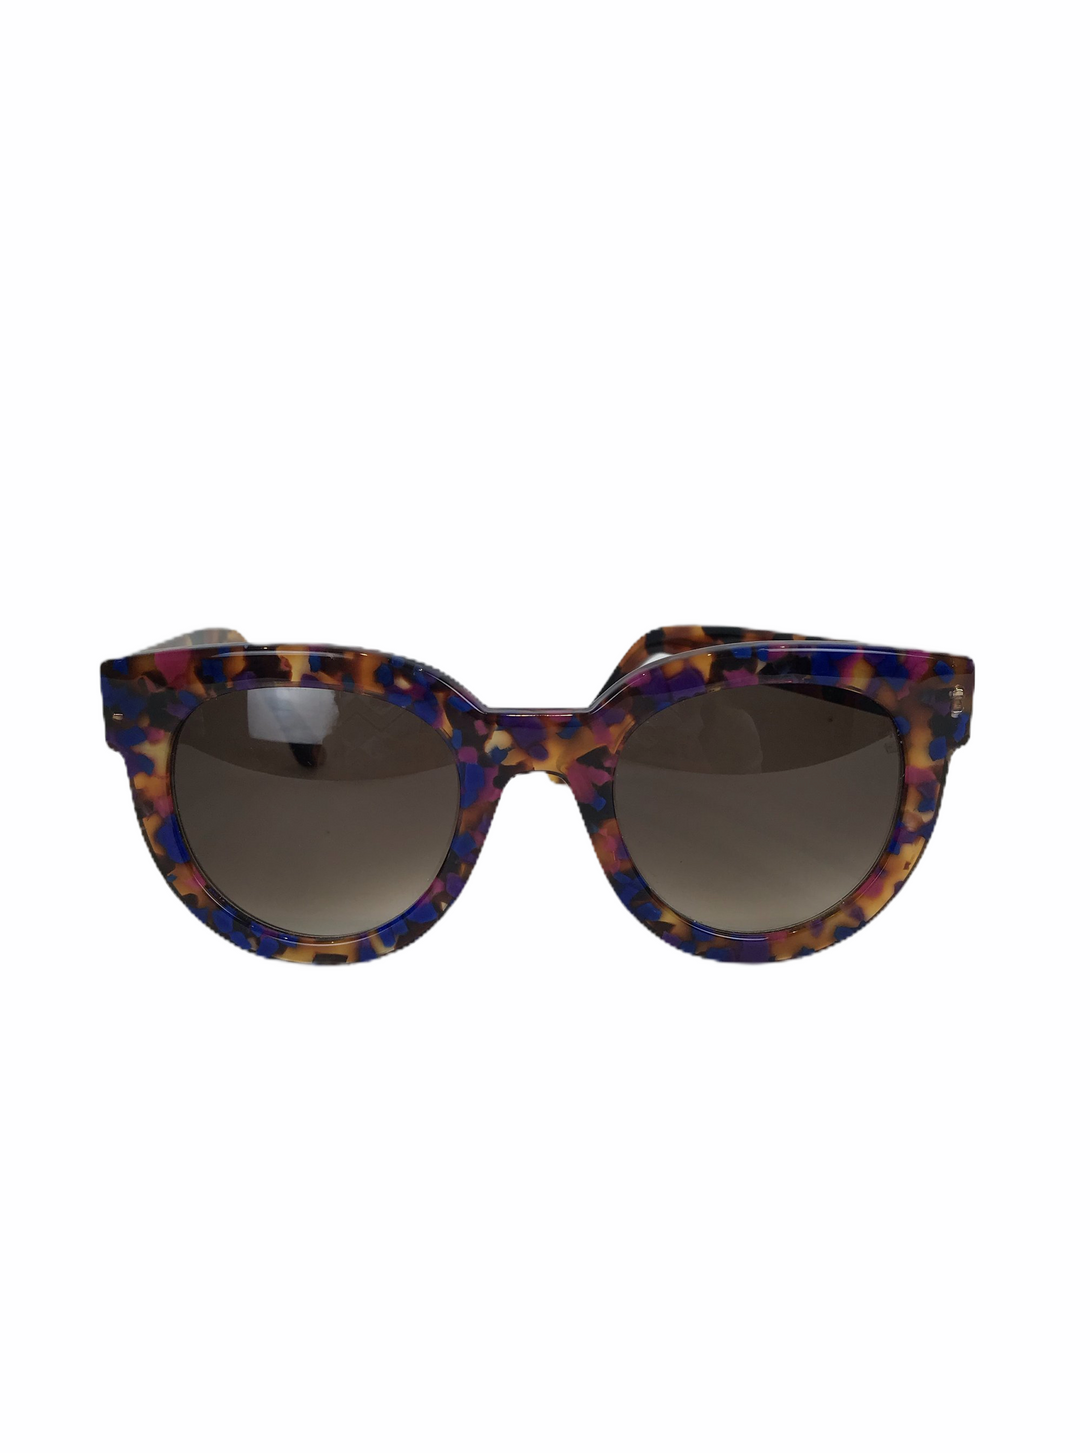 Thierry Lasry Speckled Sunglasses - Siopaella Designer Exchange